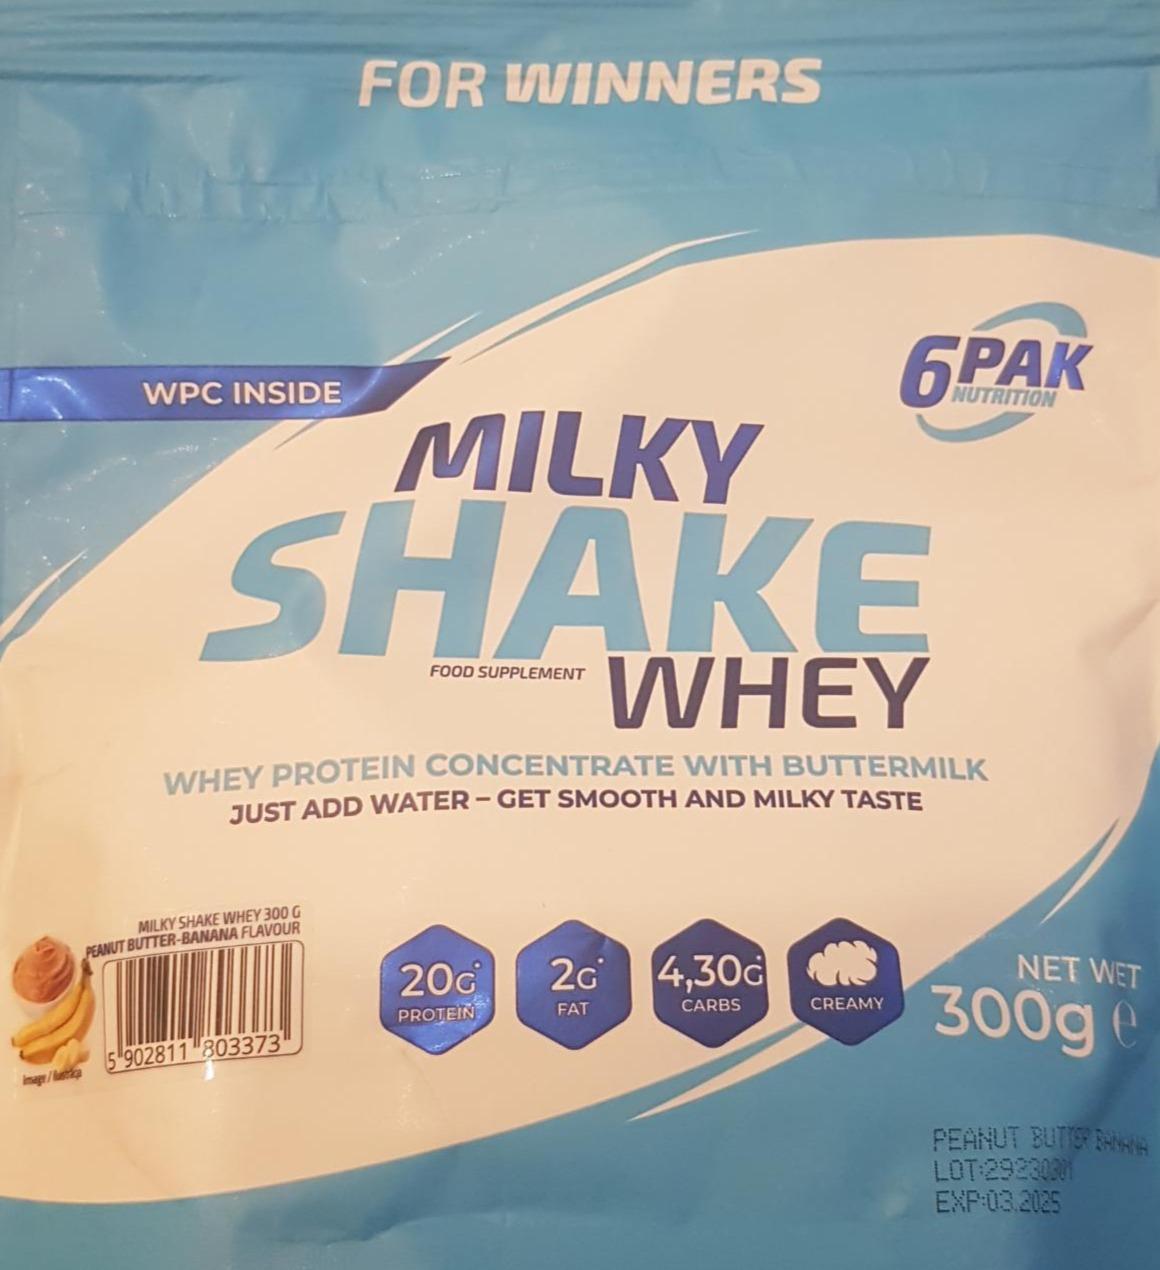 Zdjęcia - Milky Shake Whey Peanut Butter Banana 6PAK Nutrition